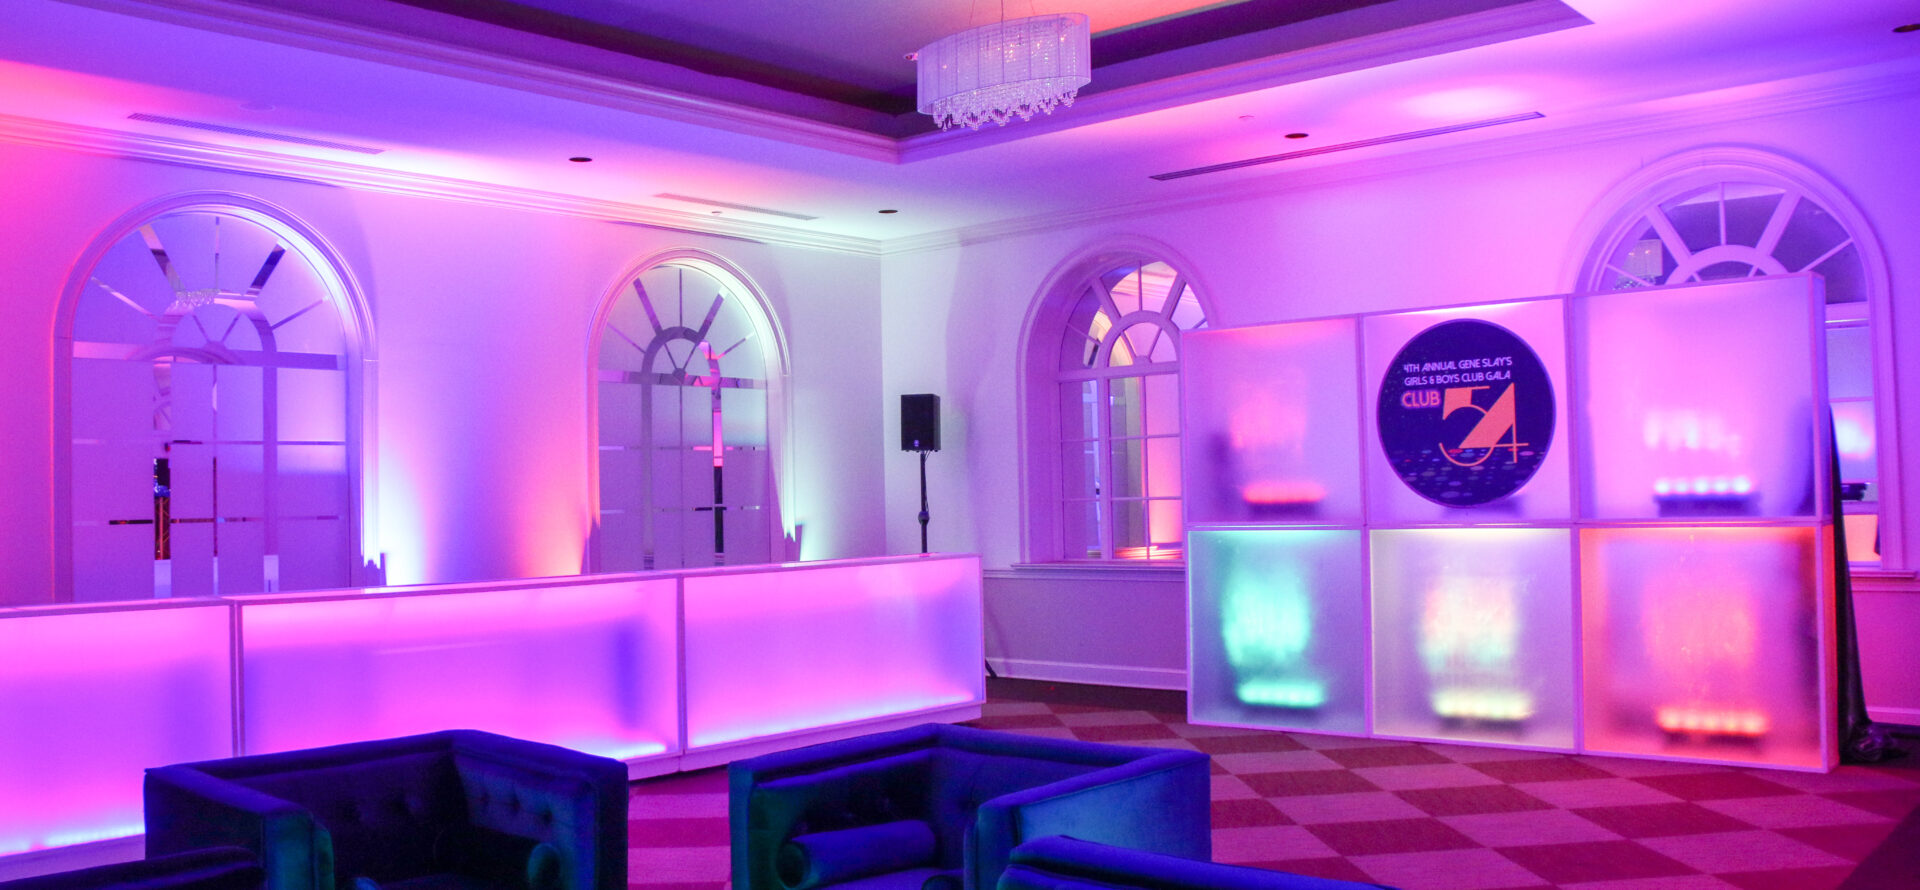 Modern bar with purple and pink lighting